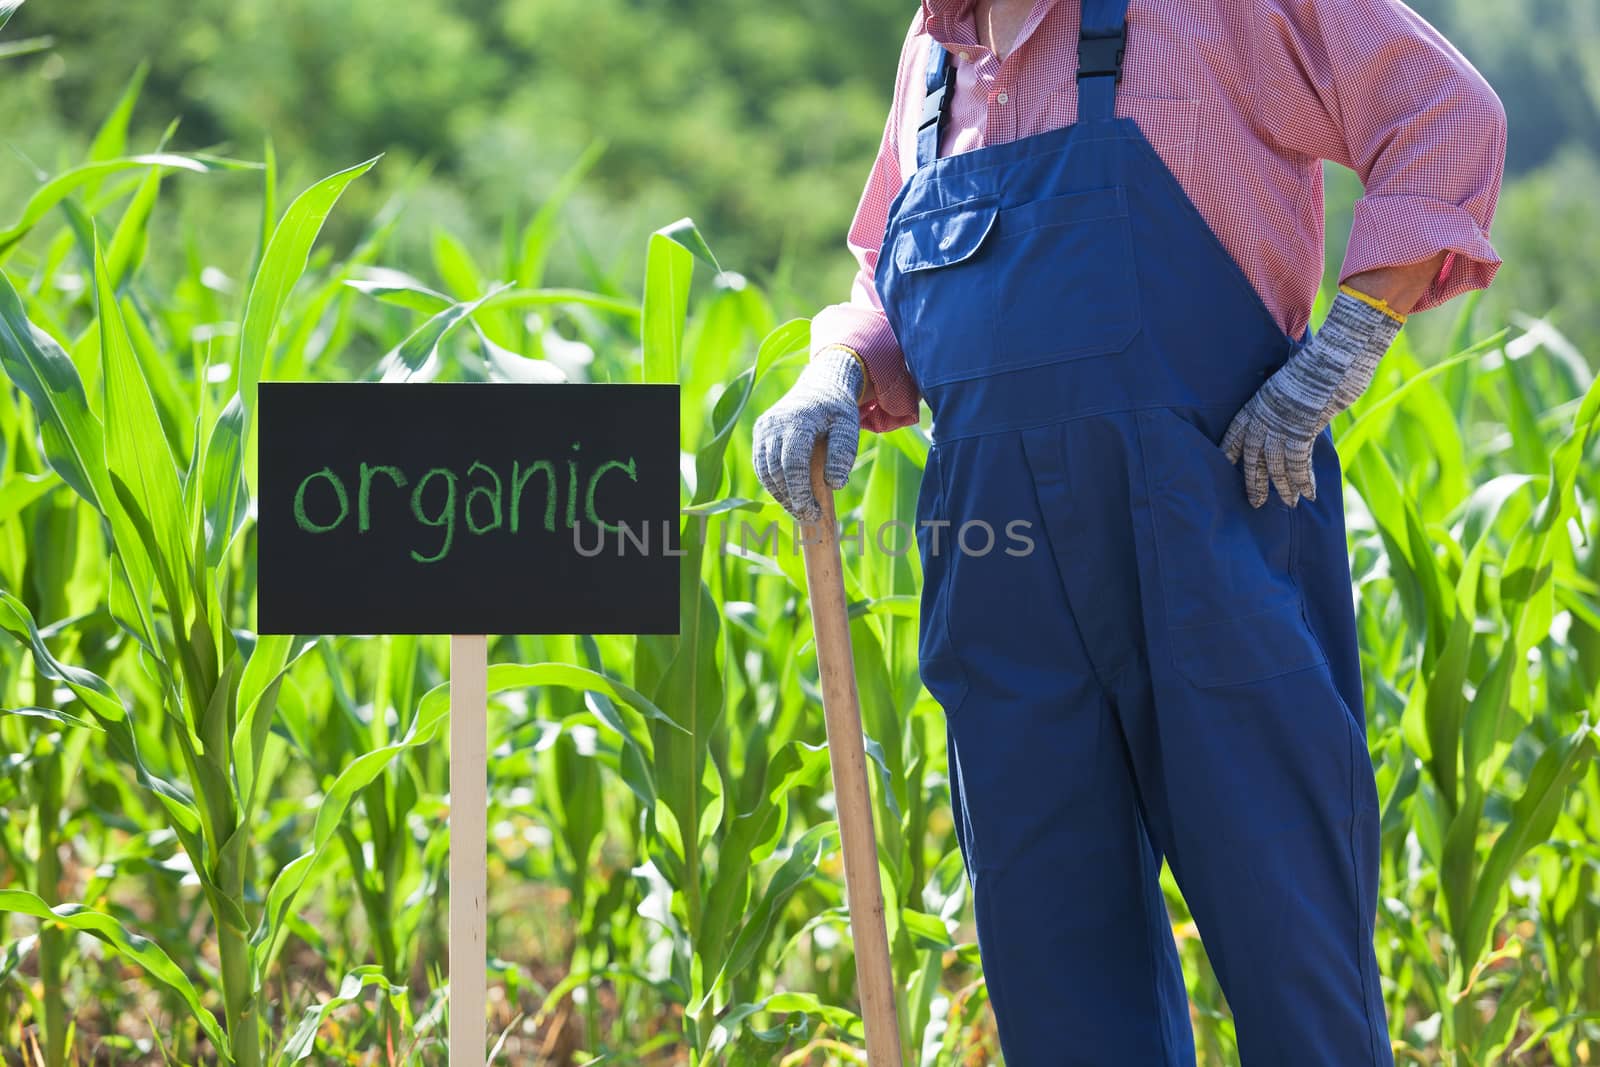 Organic corn field by wellphoto